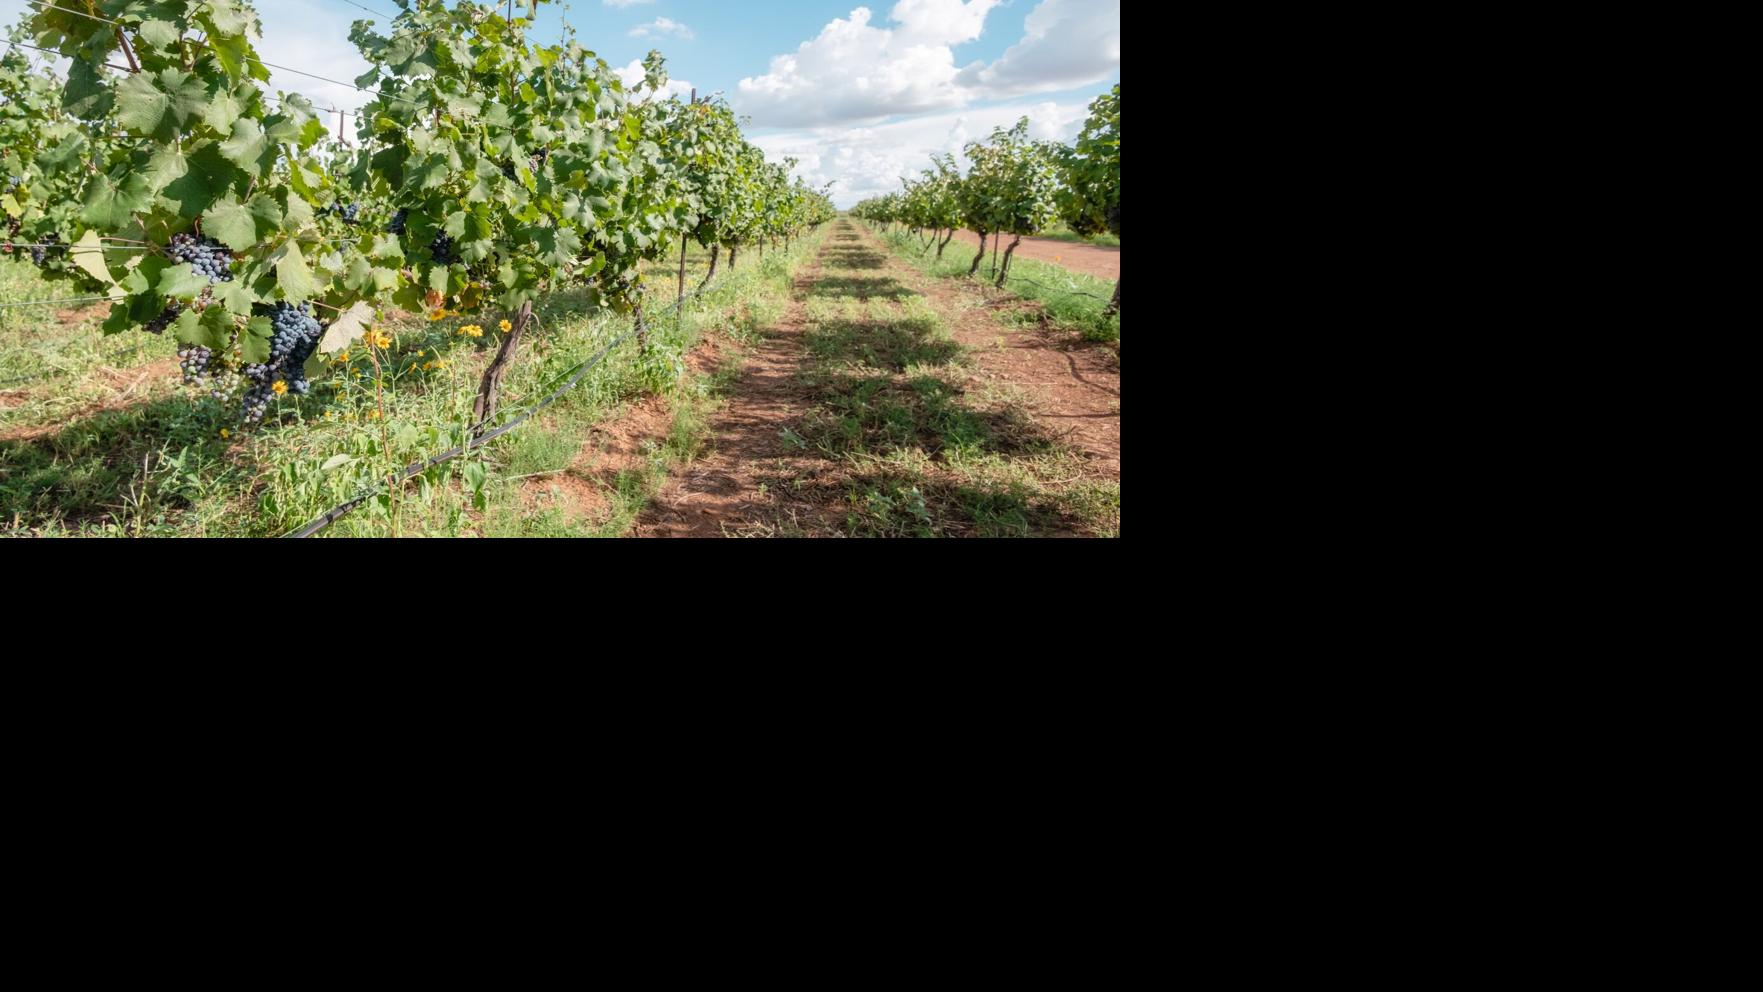 Sonoran Wines in Southern Arizona wins national wine awards